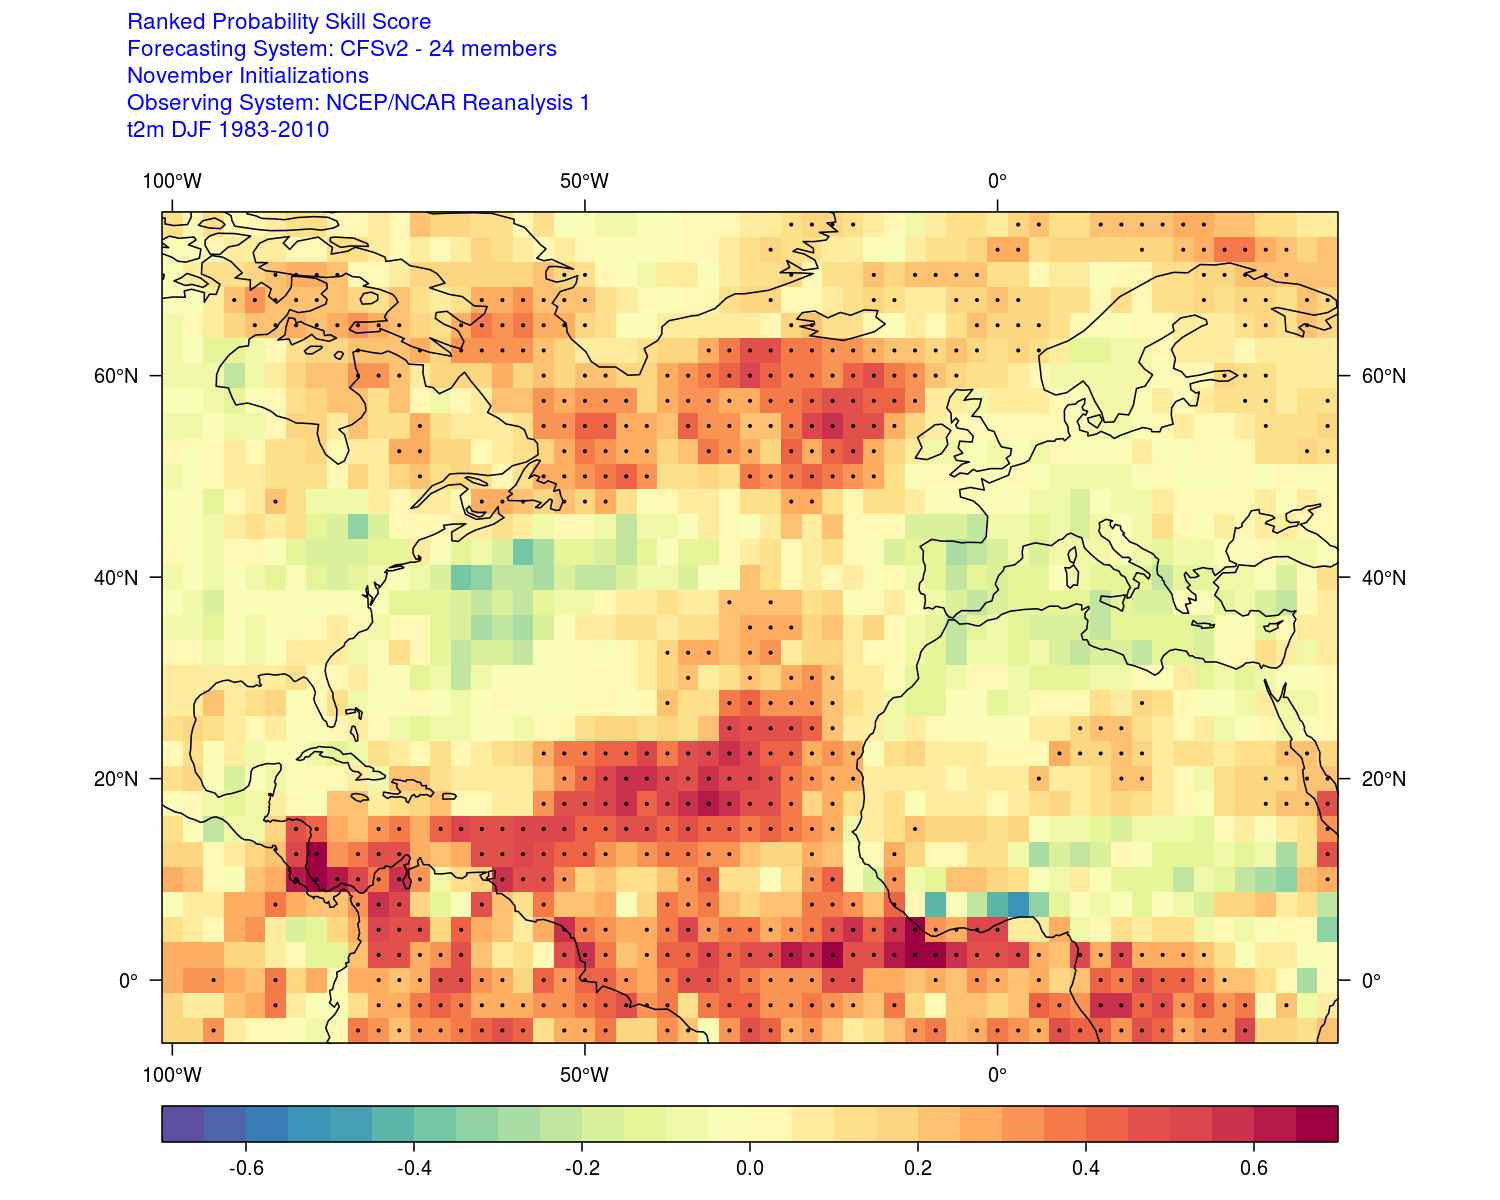 Validation of seasonal forecasts: Spatial plots of RPSS